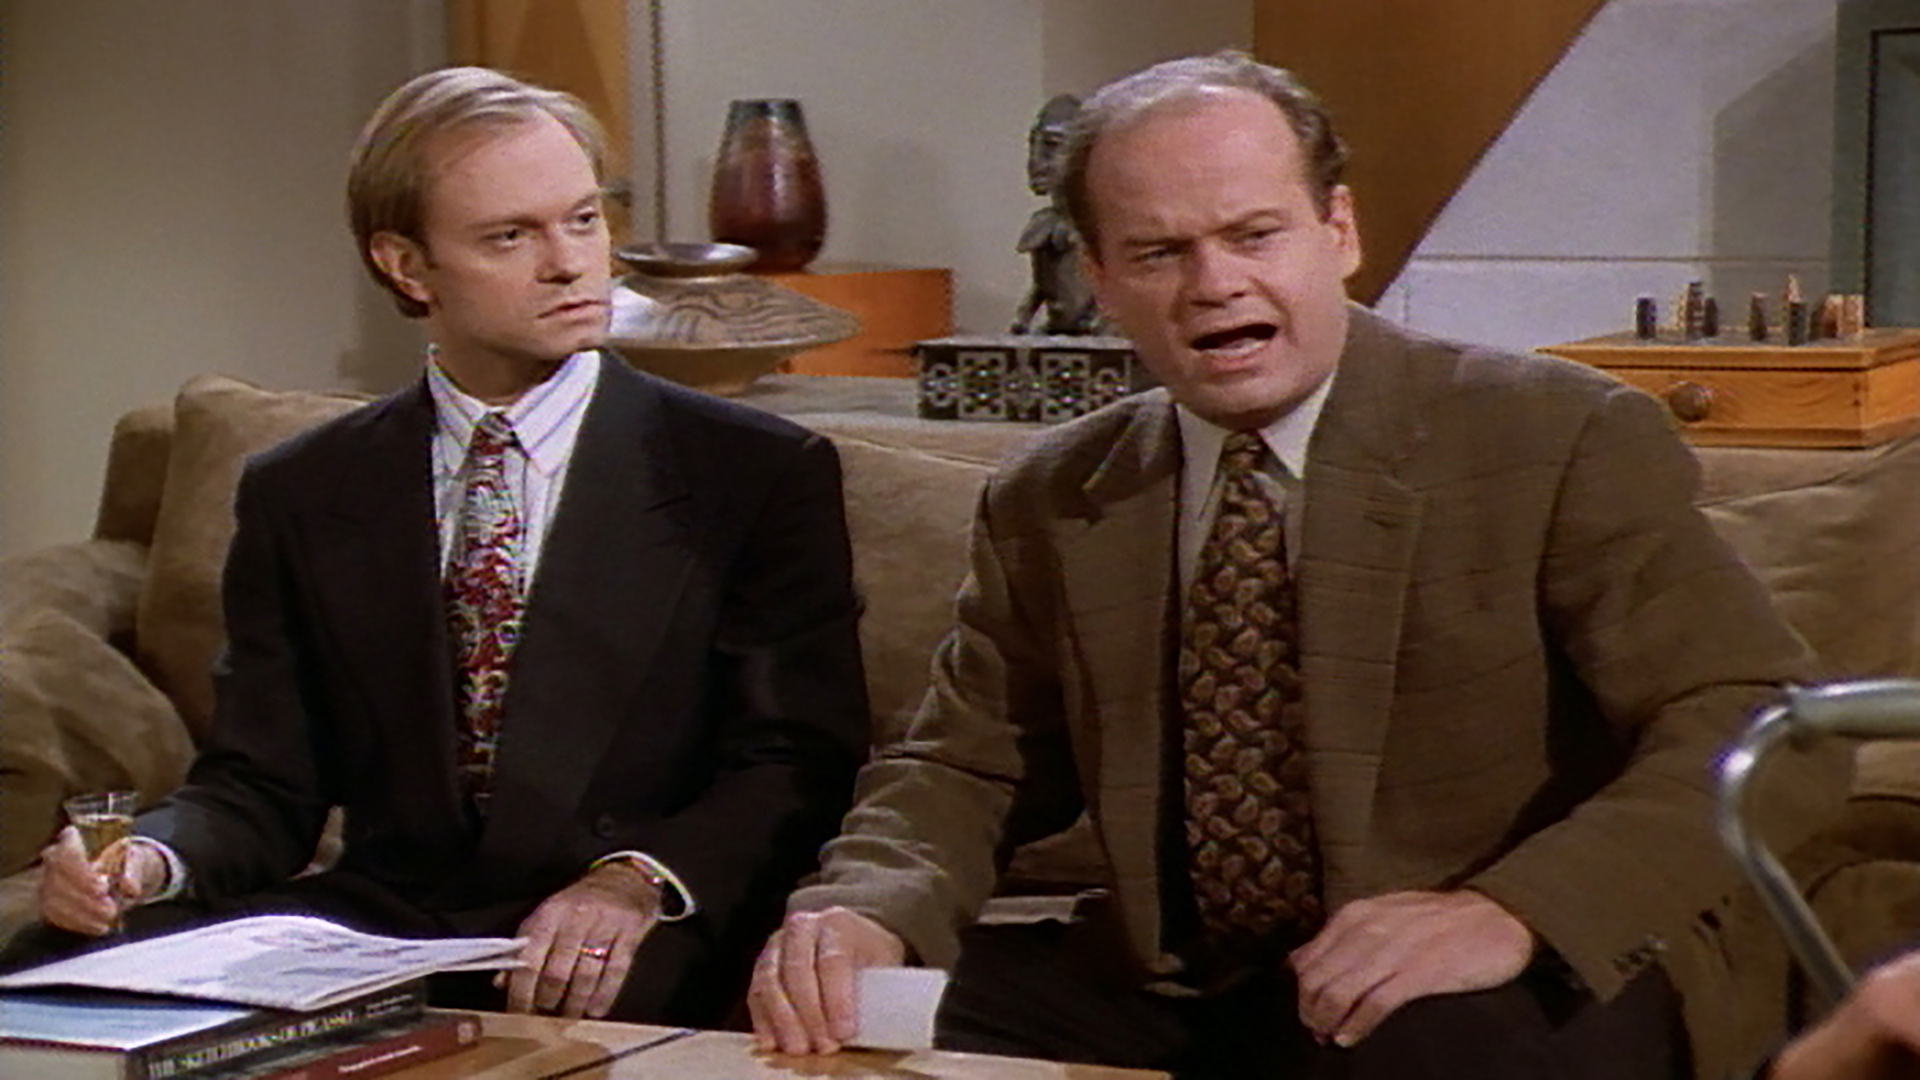 Watch Frasier (1993) Season 3 Episode 11 The Friend Full show on